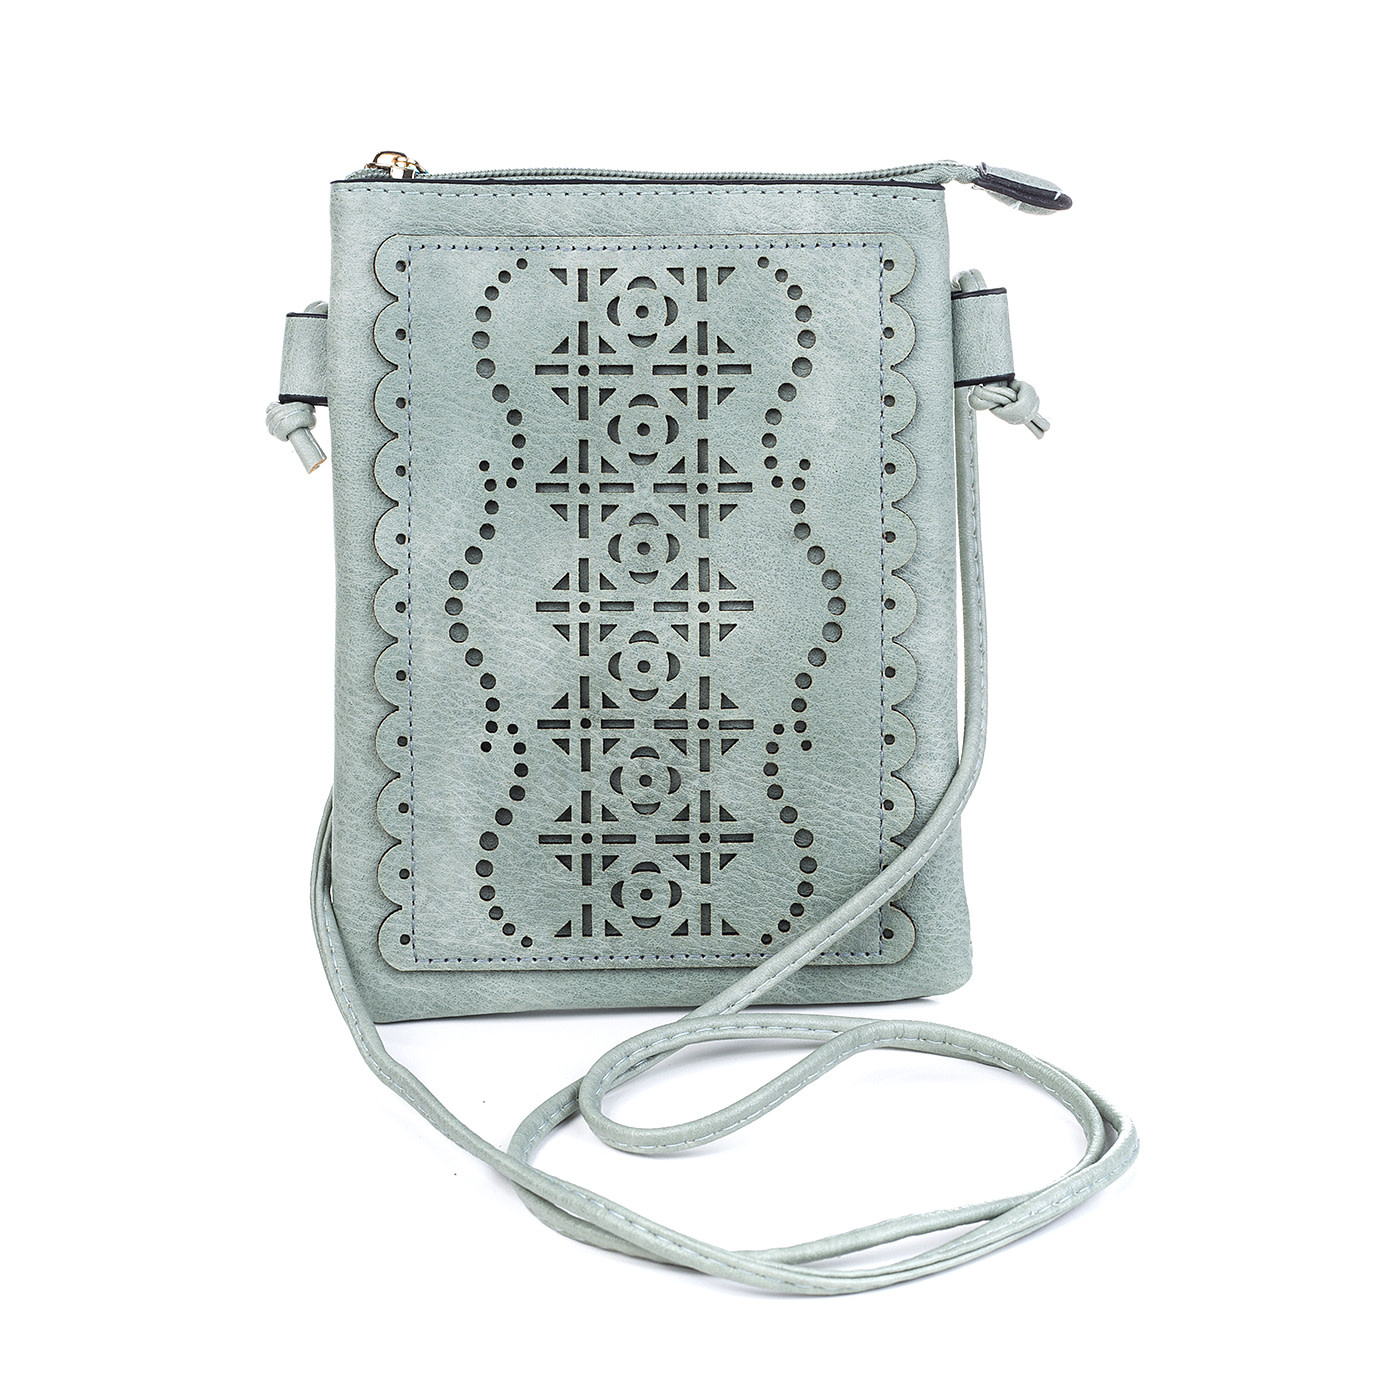 Ivys Clothing & Fashion Accessories Teal Crossover Handbag